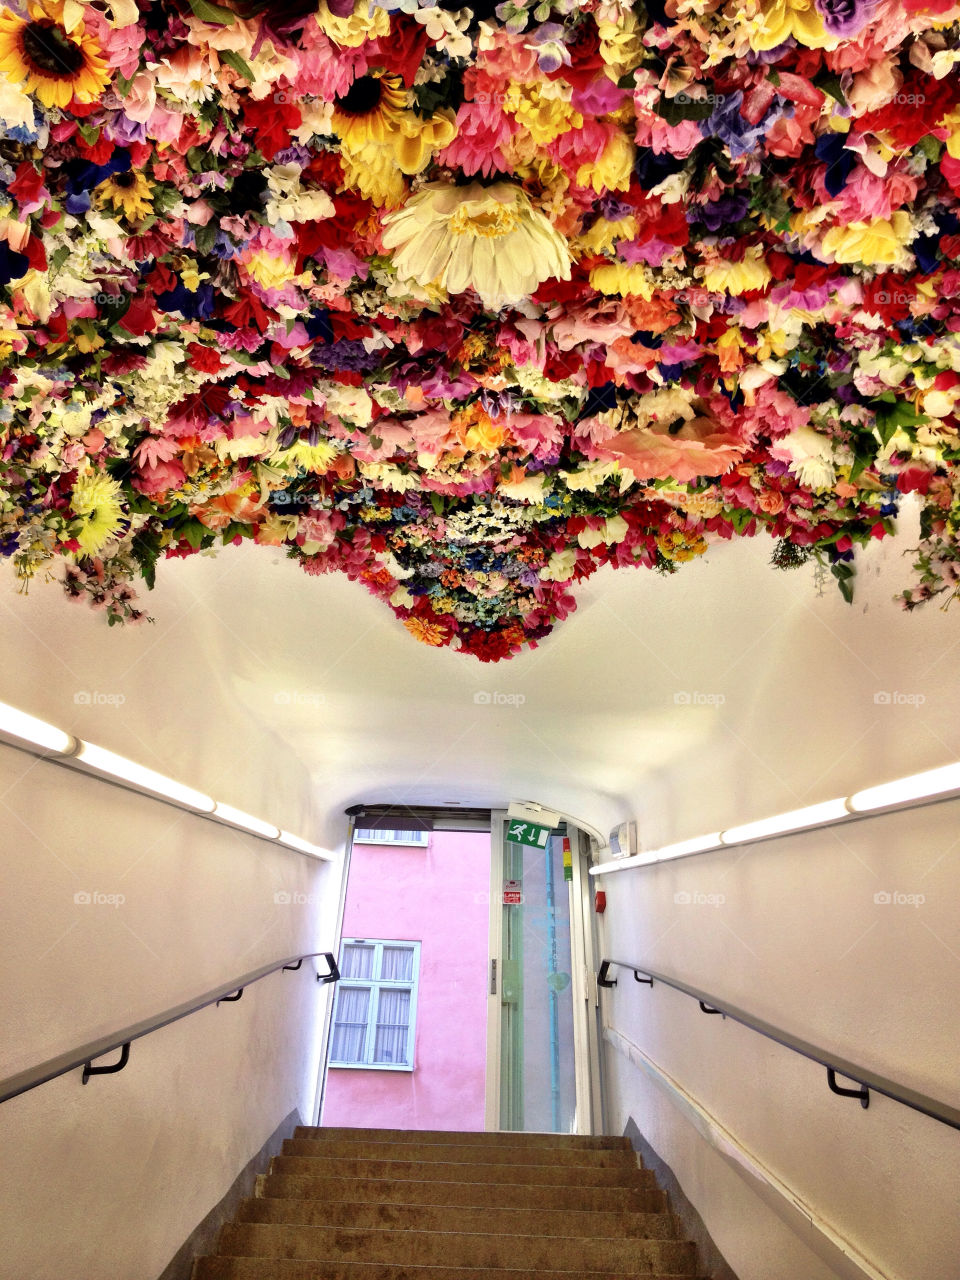 flowers art door stair by carina71